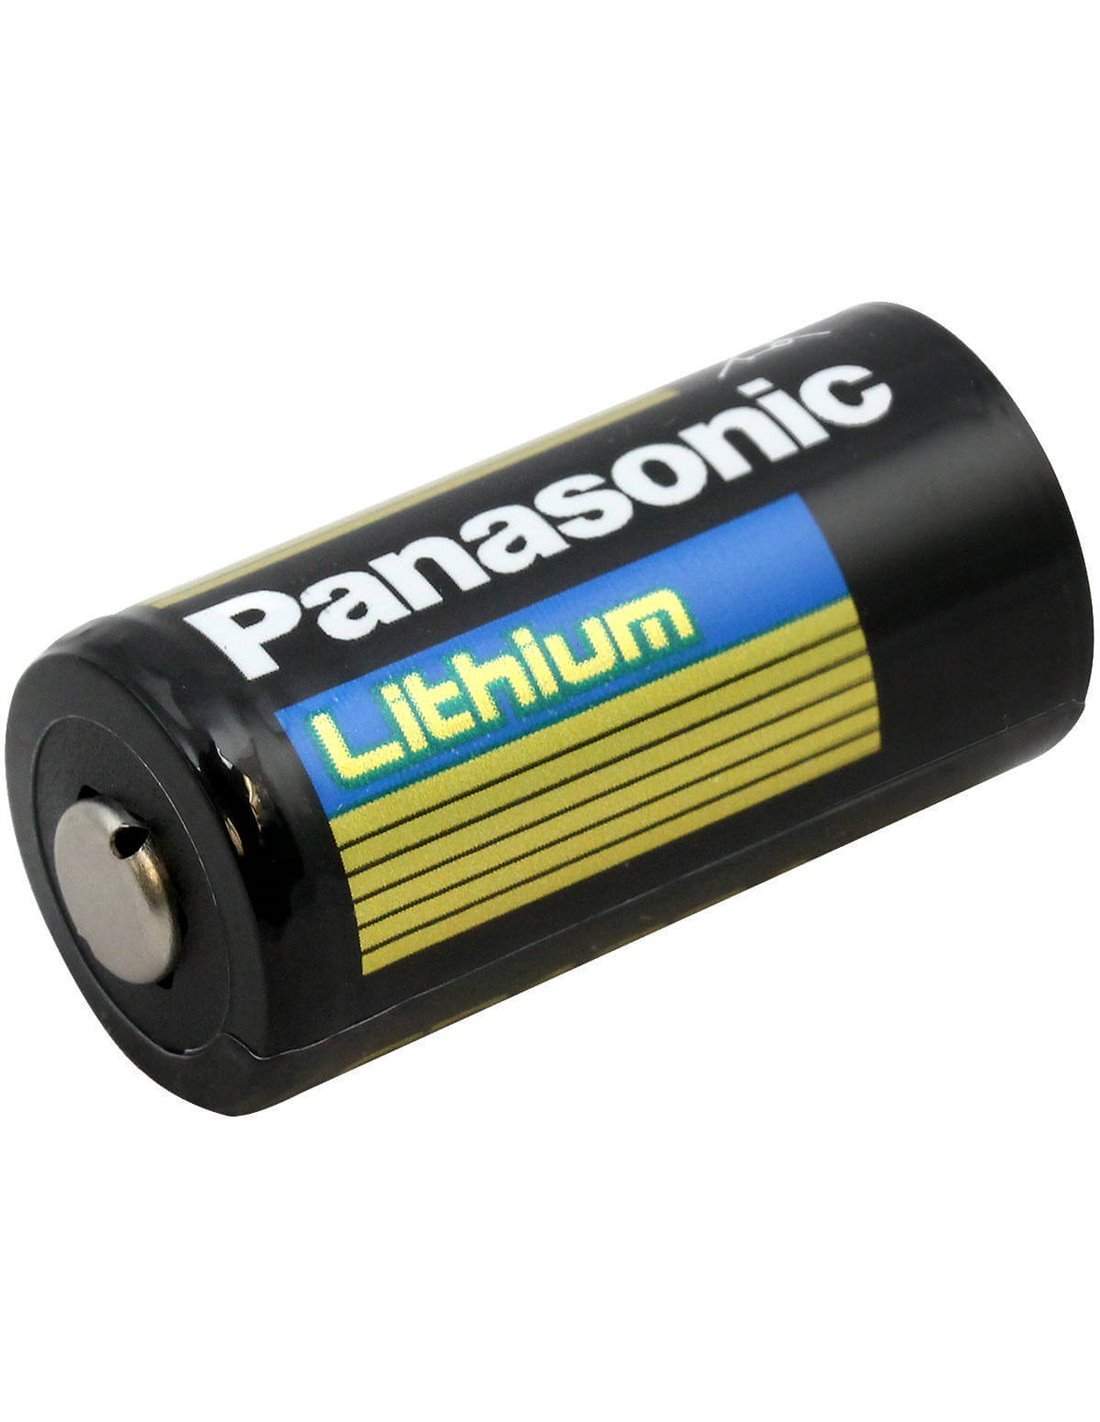 Panasonic 3V CR123A 1400Mah Lithium Battery replaces CR17345